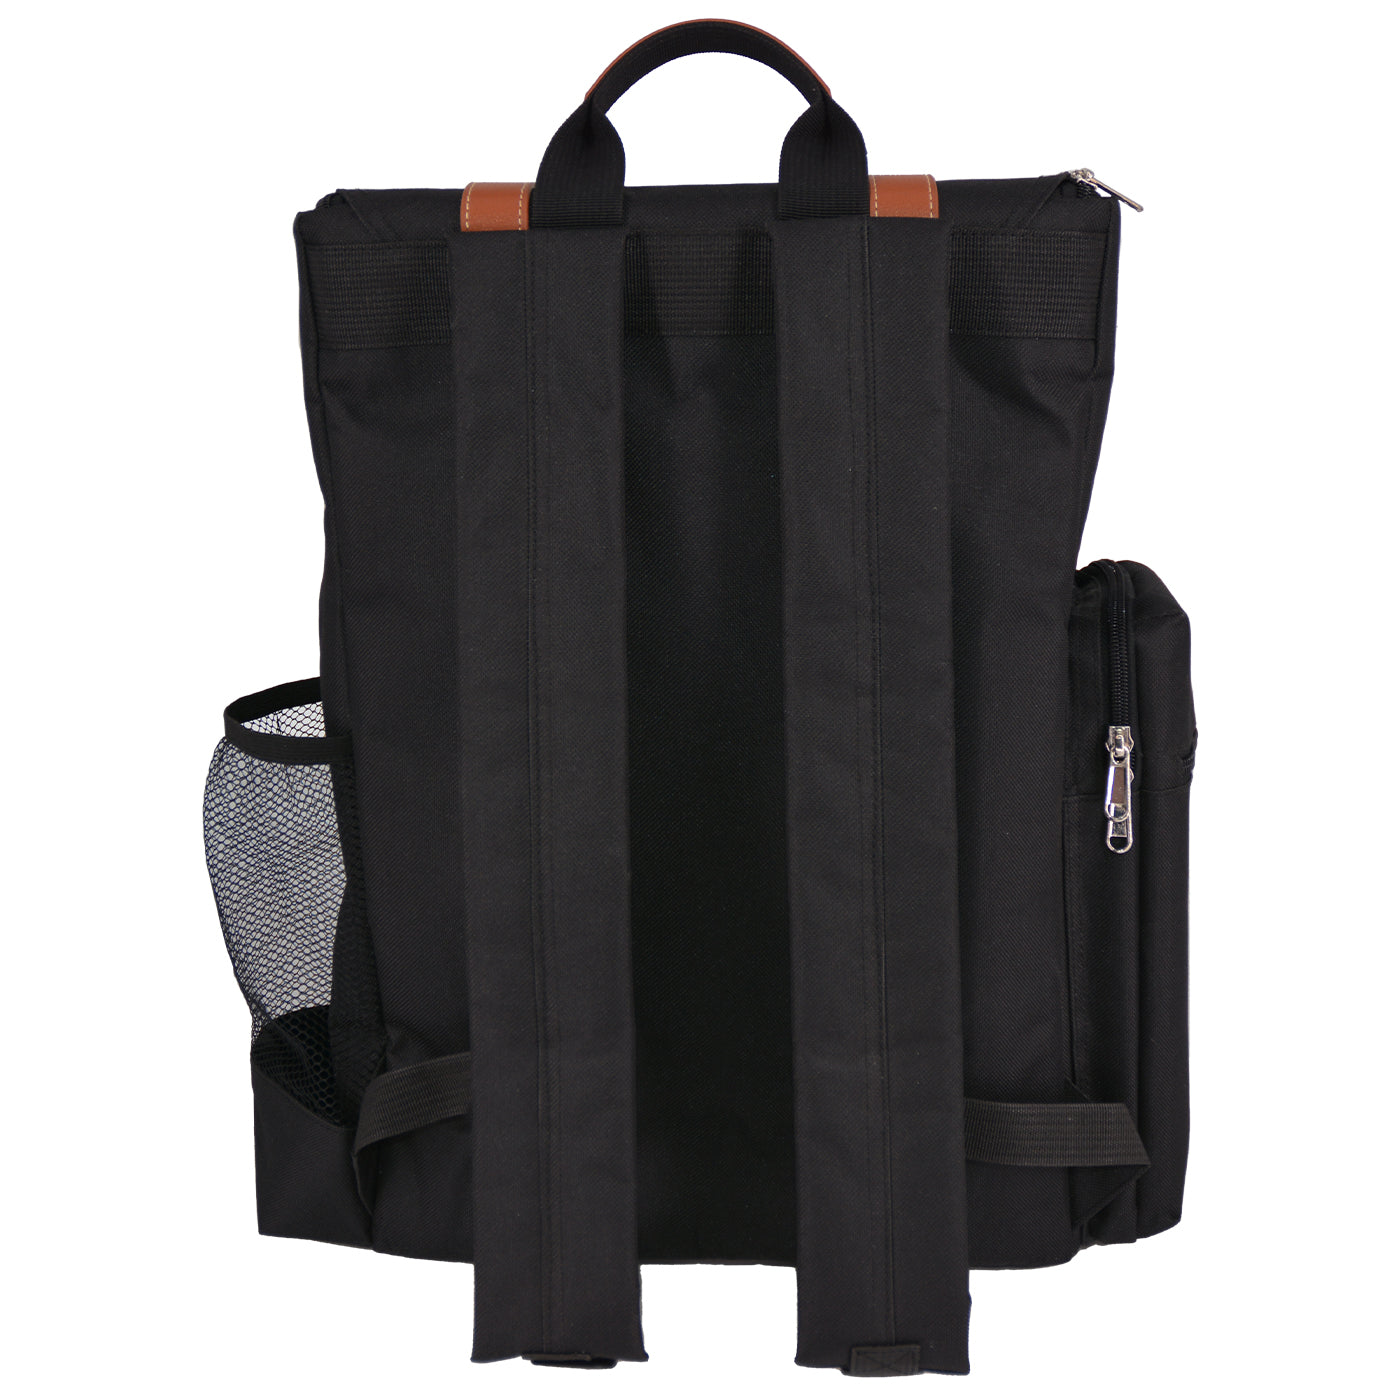 Picnic backpack "Escapade" Black - 4 persons